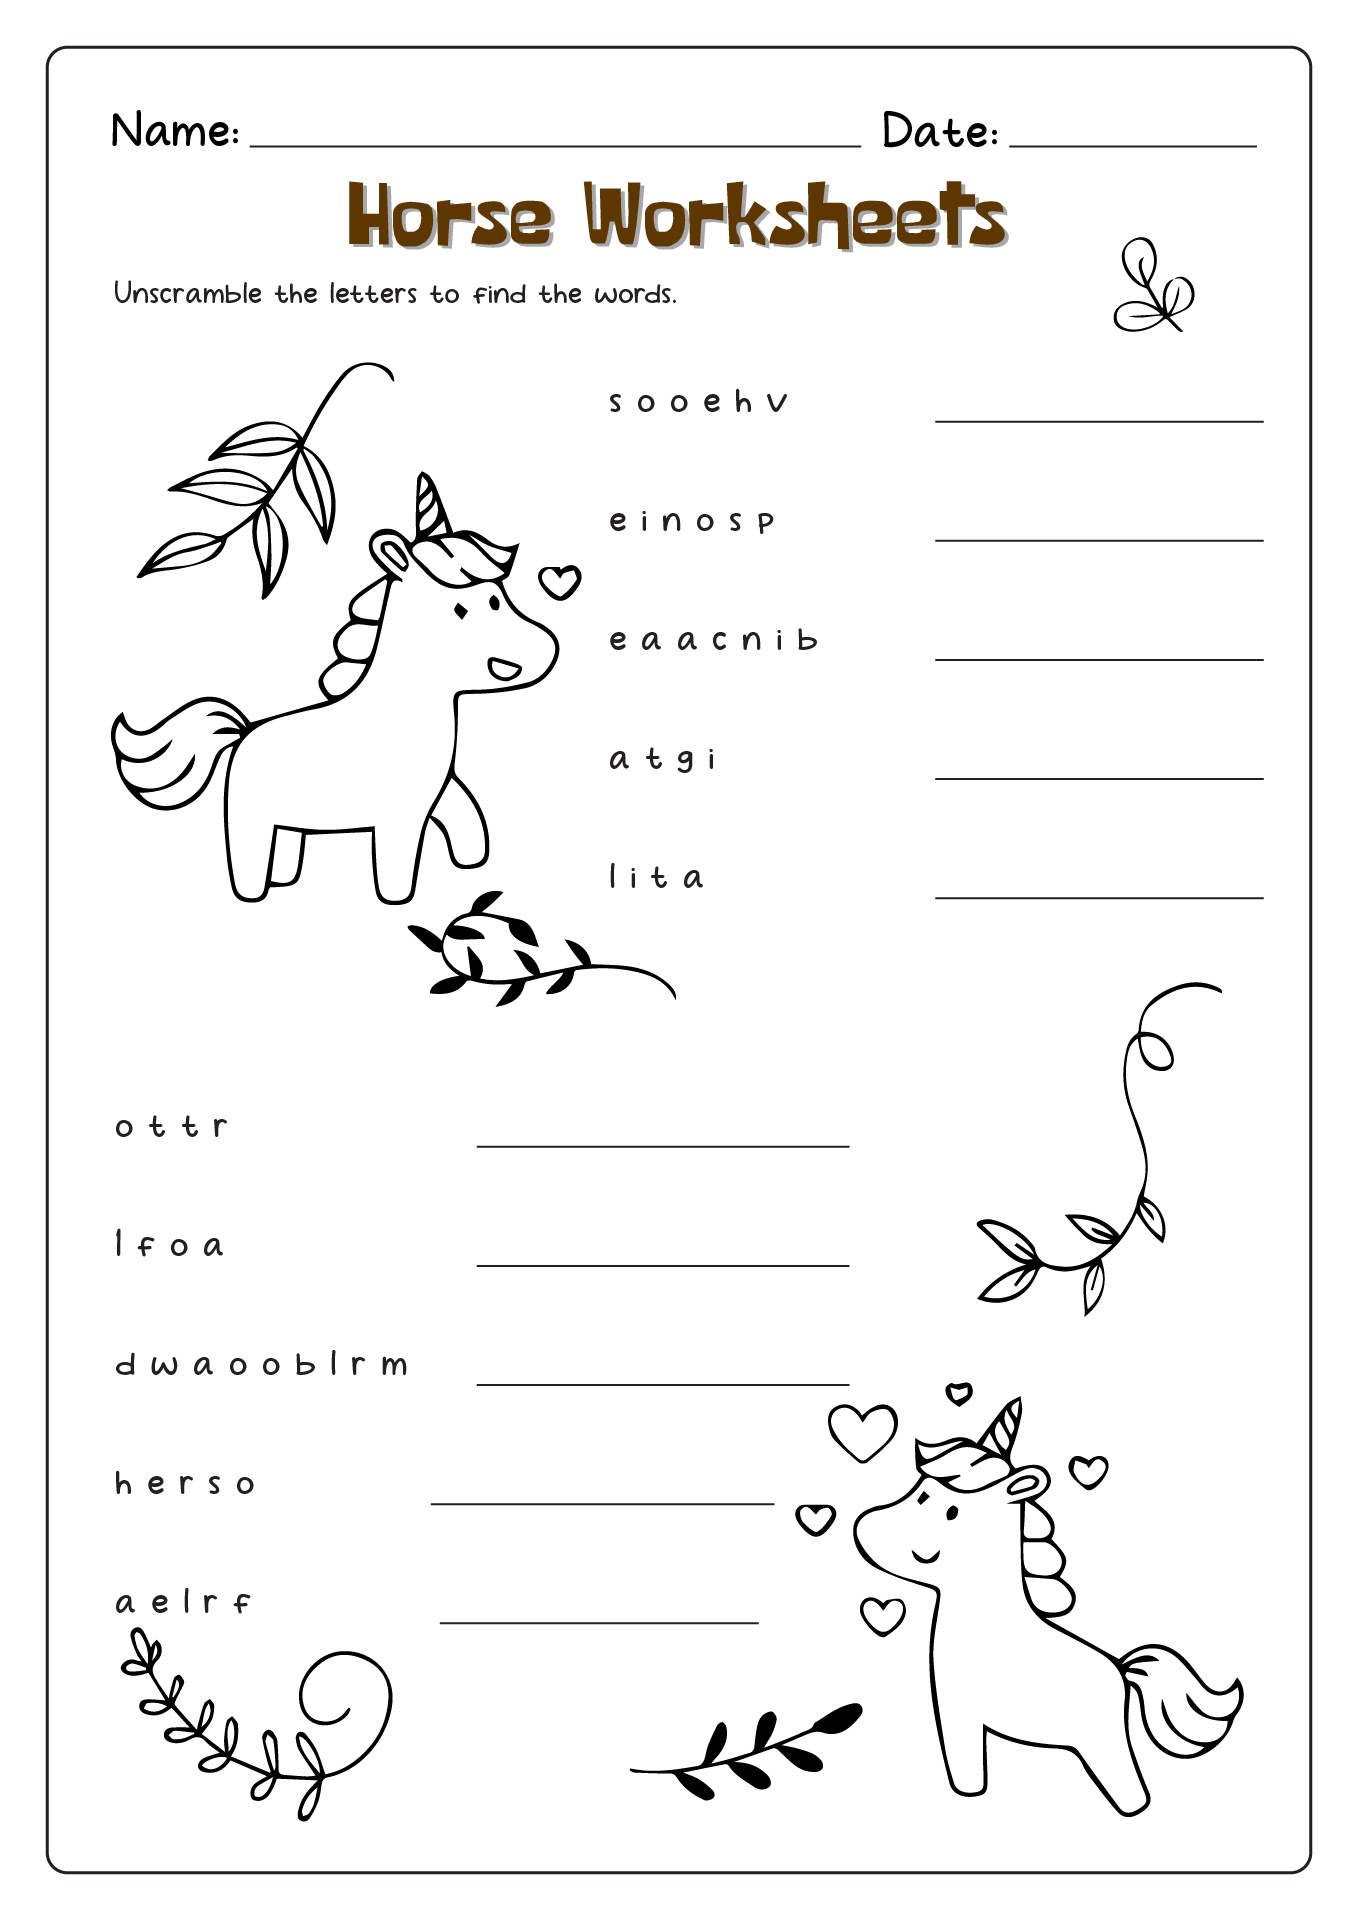 Horse Worksheets Printable